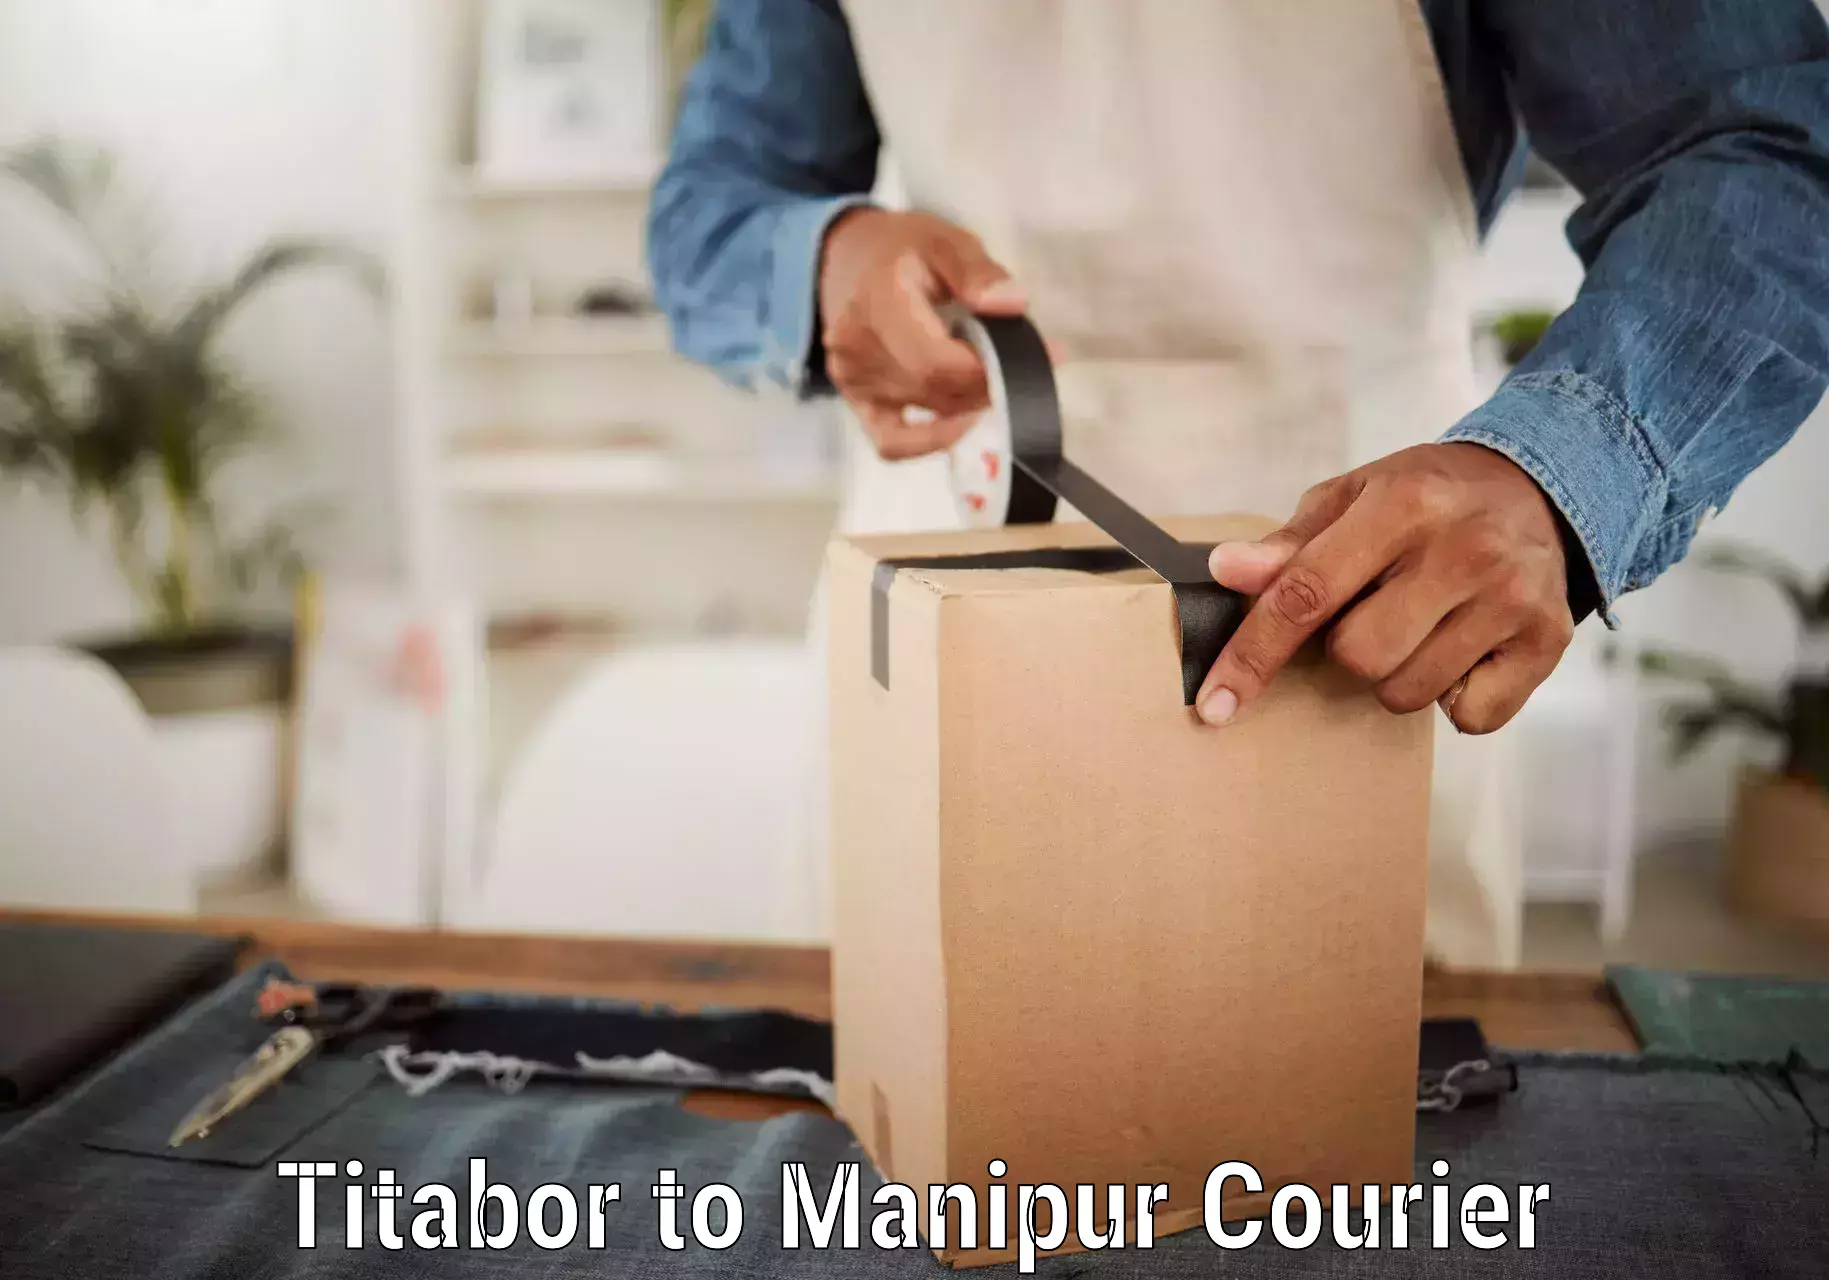 Logistics service provider Titabor to Kanti